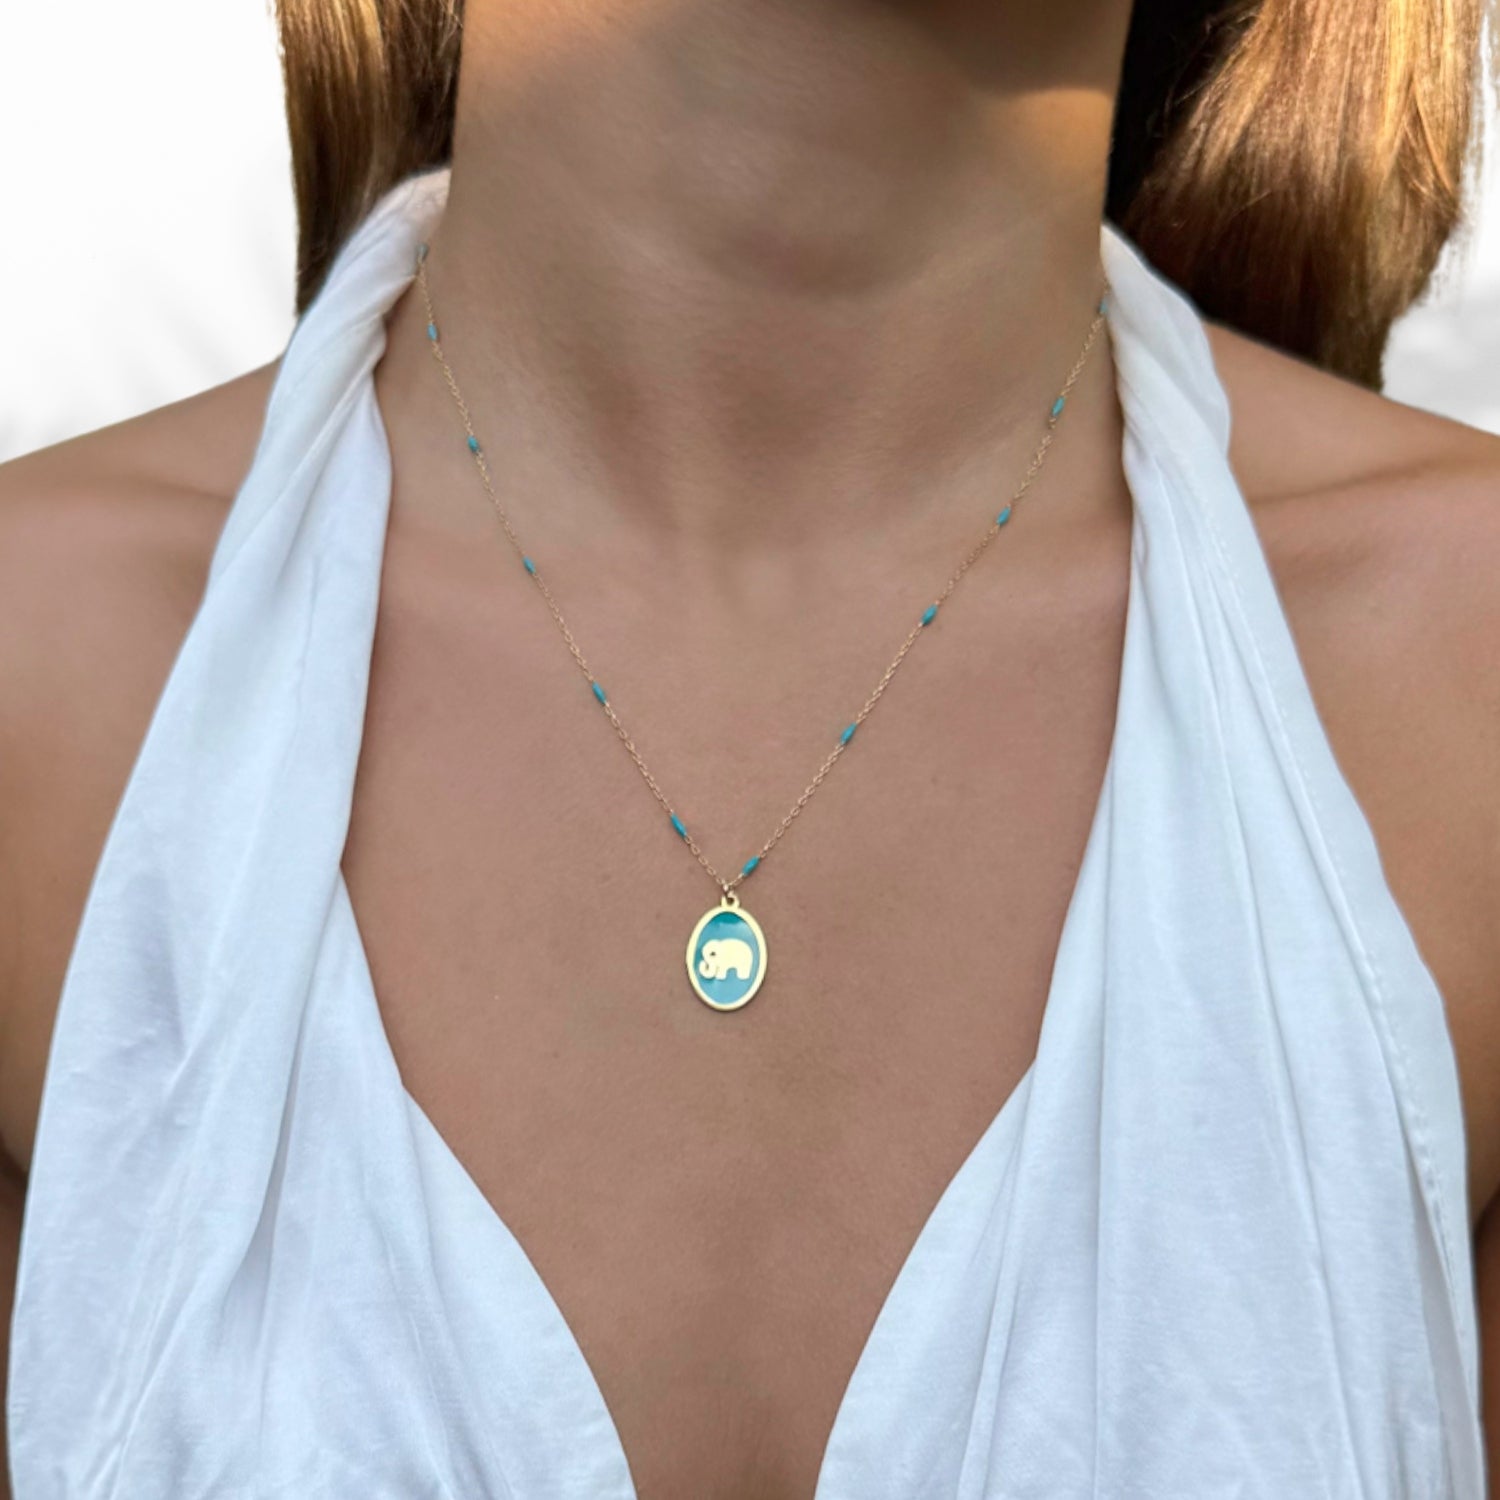 Model Wearing Meaningful Elephant Pendant Necklace with Turquoise Enamel Chain